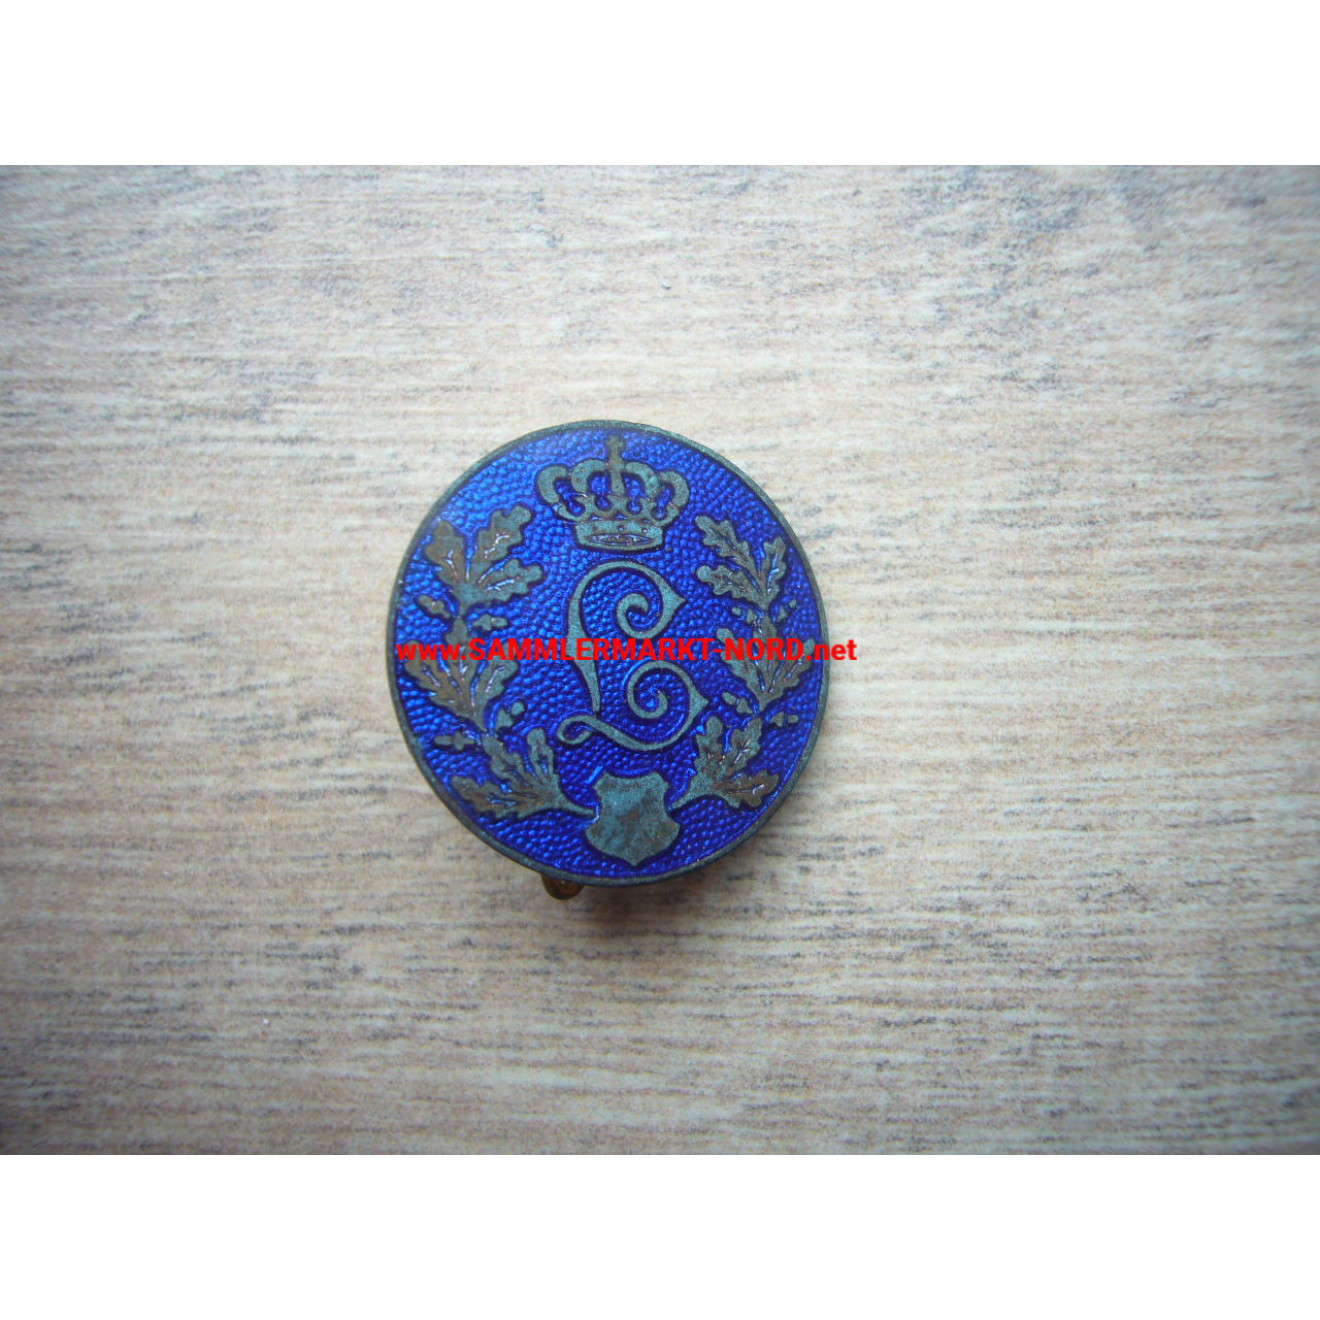 Queen Luise Association (KLB) - badge of honor 1. version